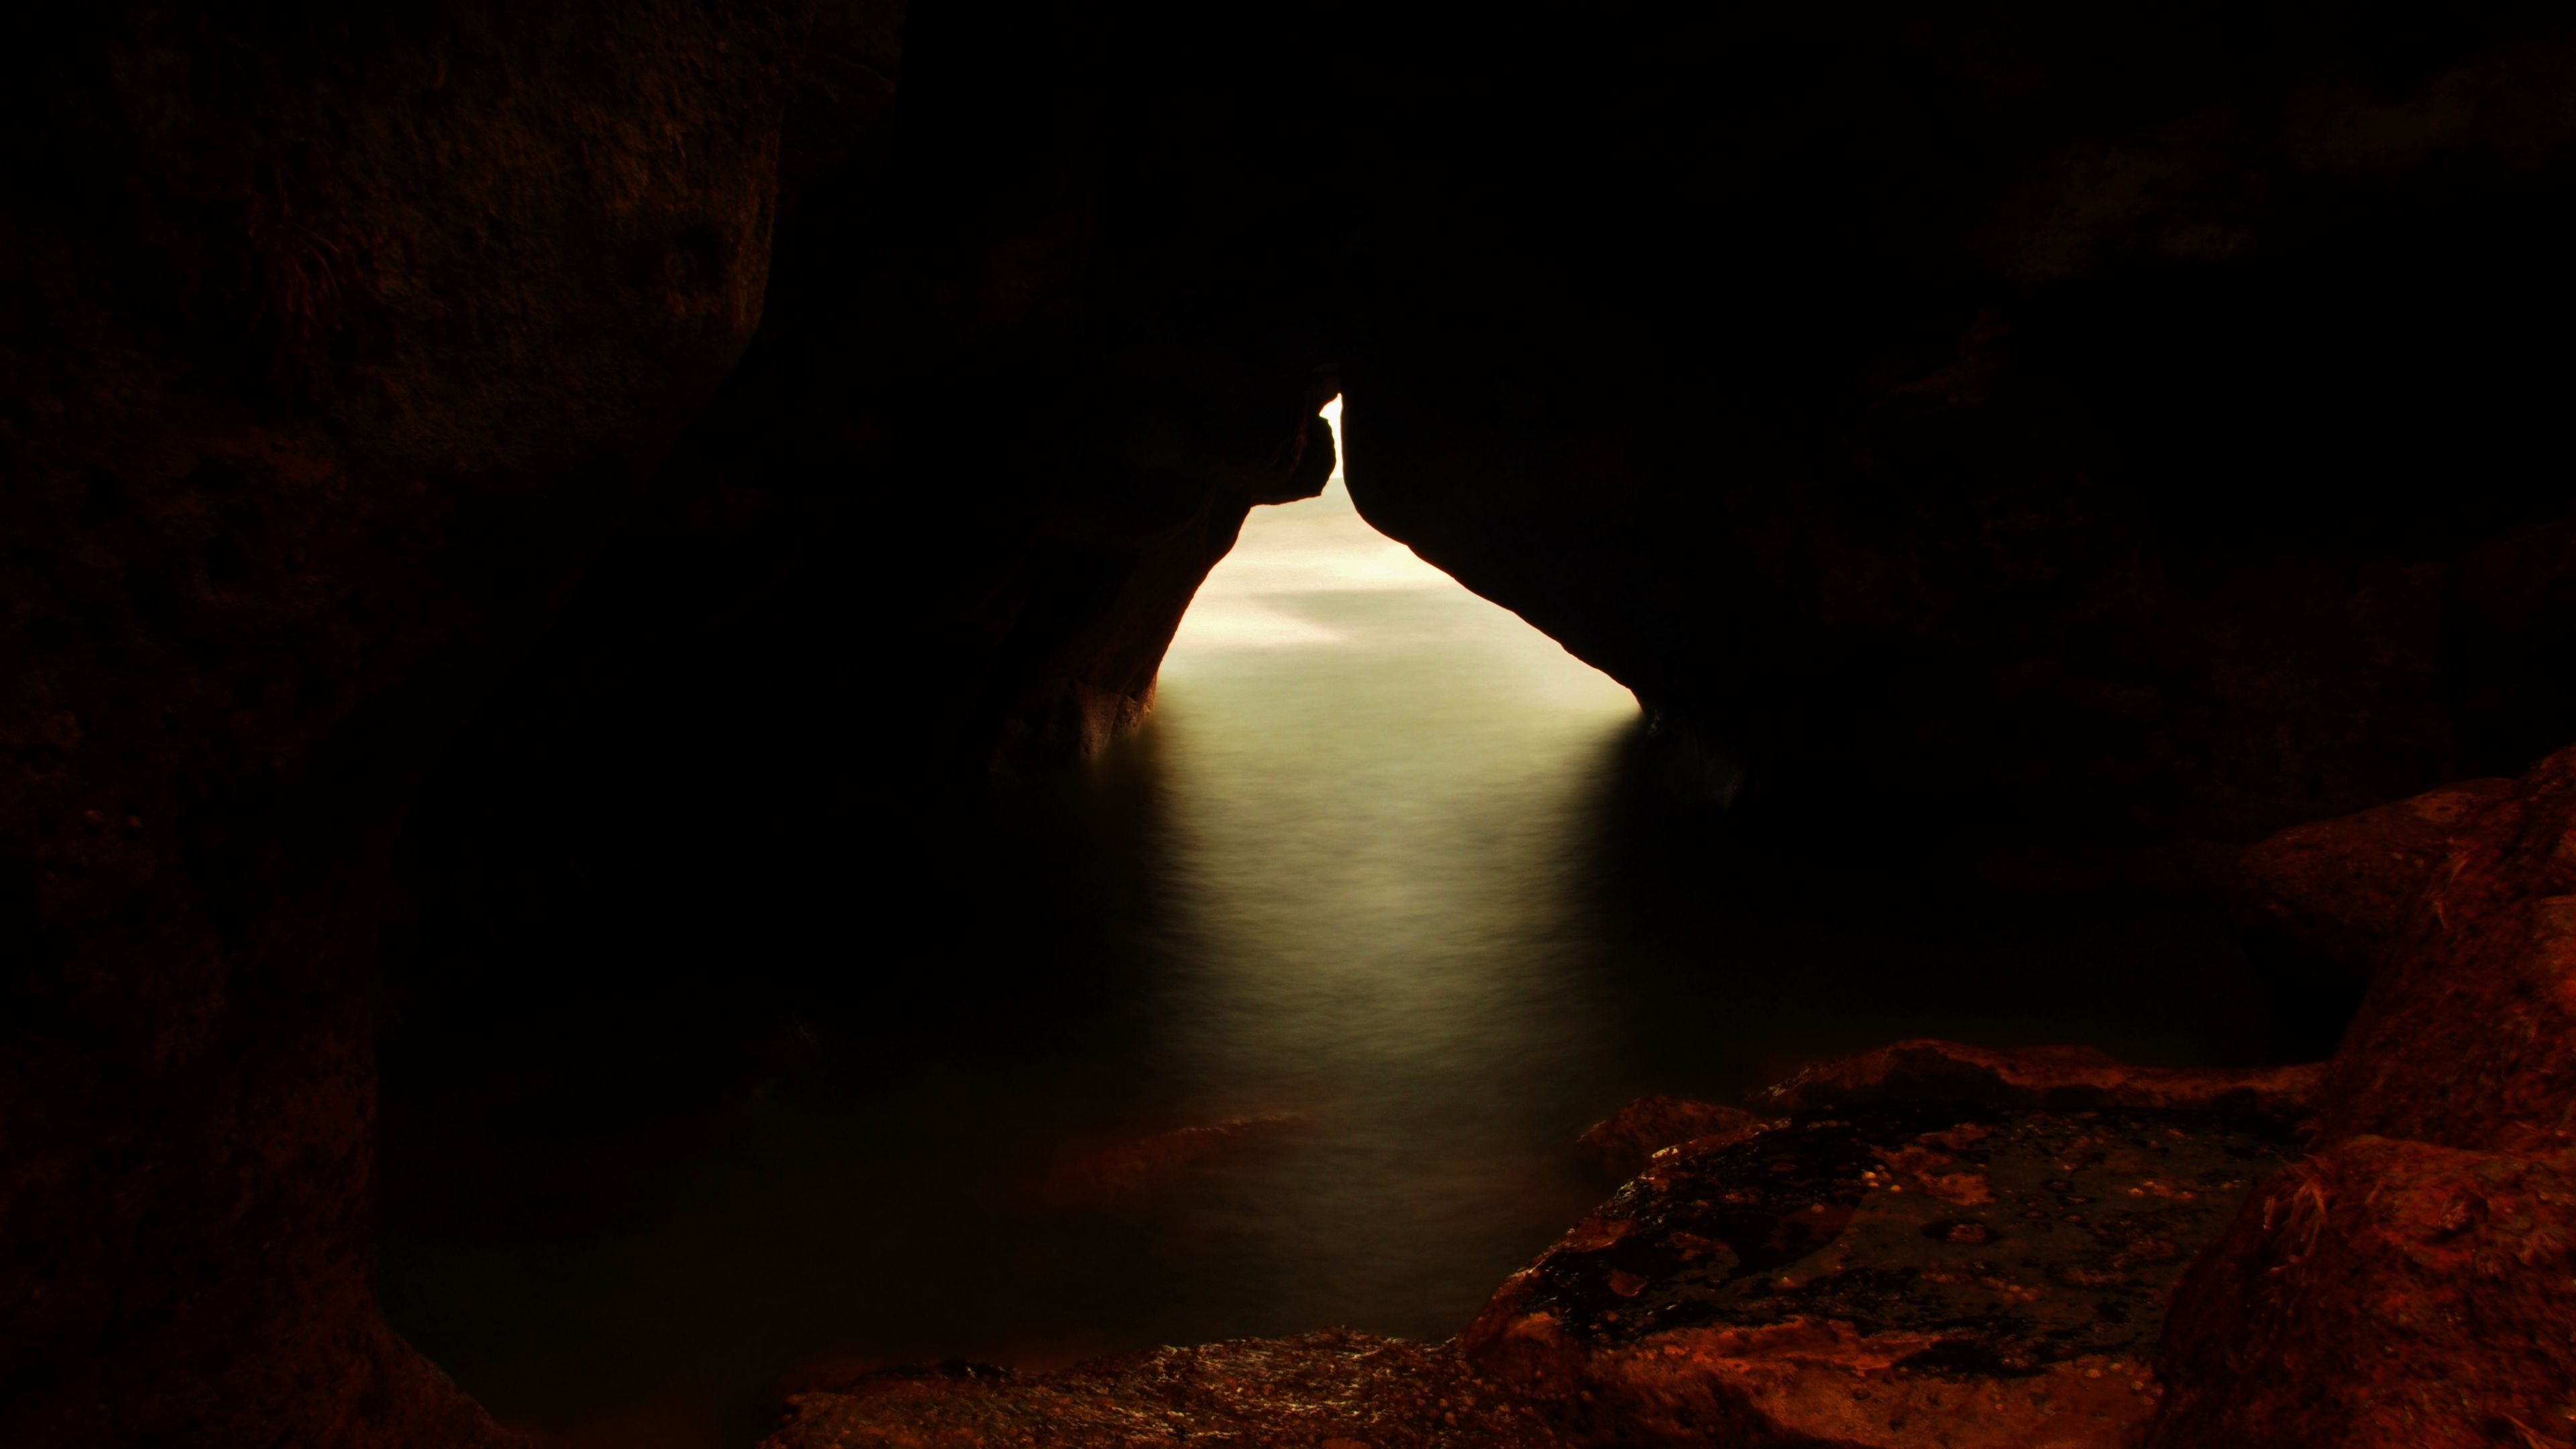 Download wallpaper 3840x2160 cave, gorge, water, light, dark 4k uhd 16:9 HD background